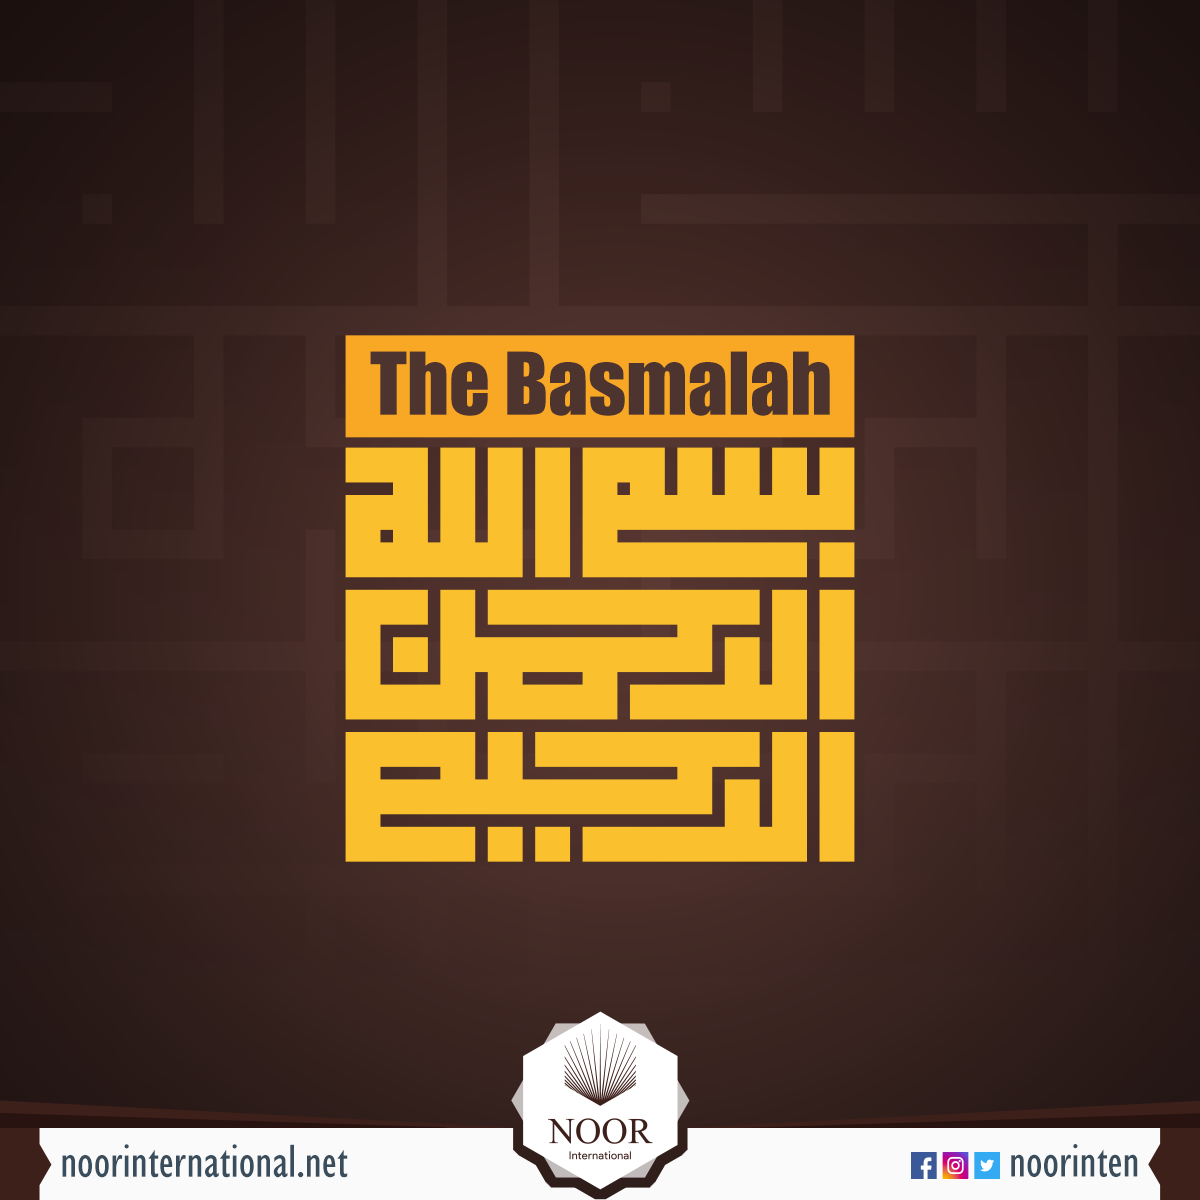 The Basmalah